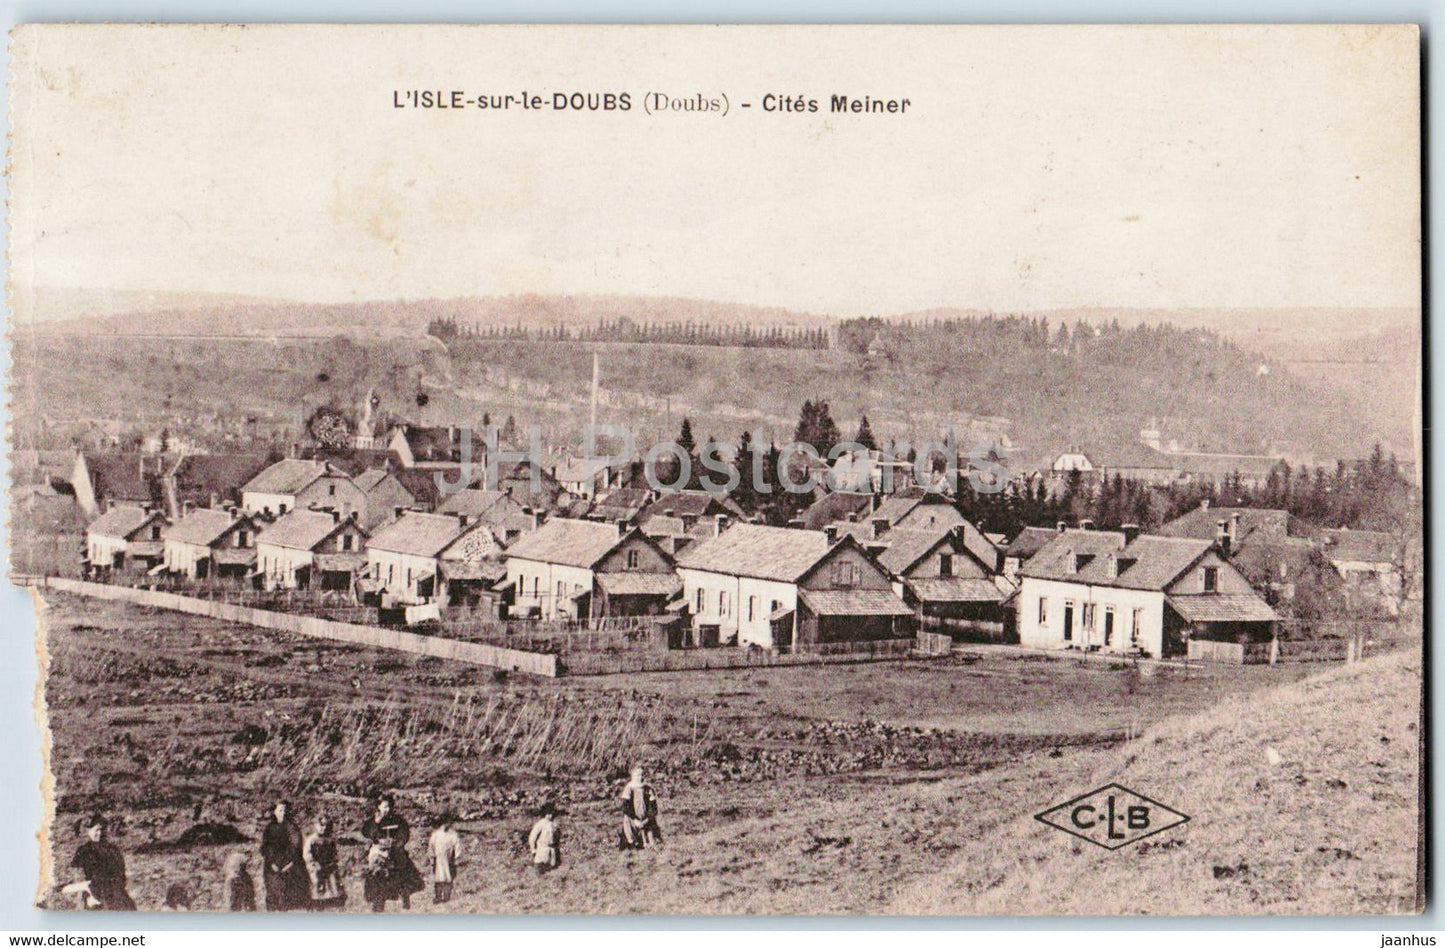 L'Isle sur le Doubs - Cites Meiner - old postcard - 1928 - France - used - JH Postcards